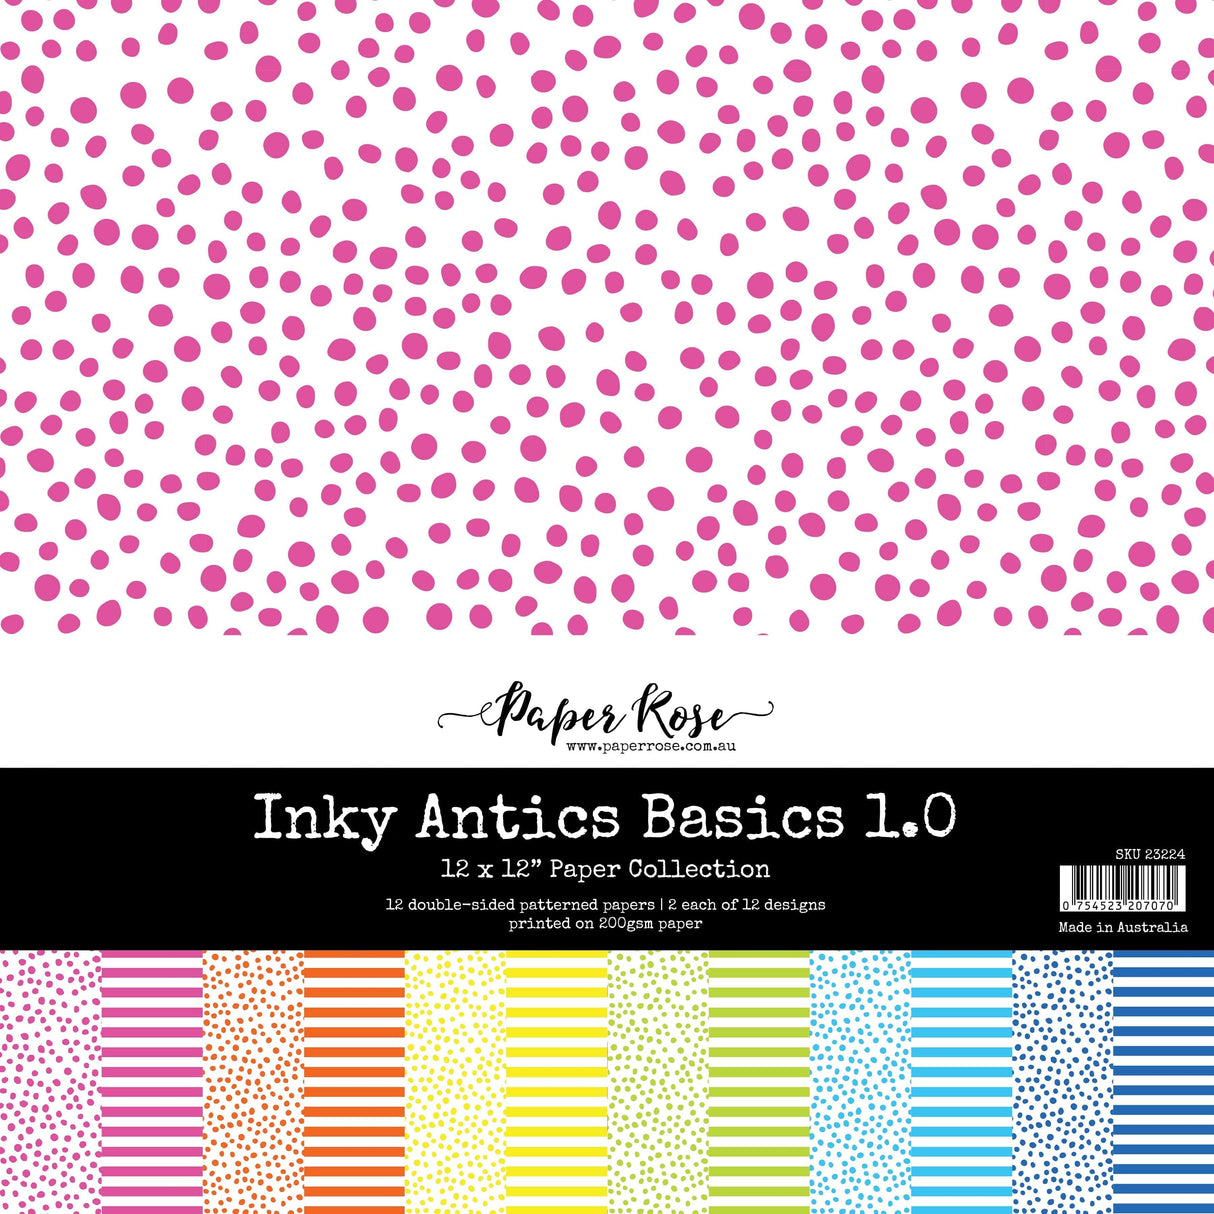 Inky Antics Basics 1.0 12x12 Paper Collection 23224 - Paper Rose Studio